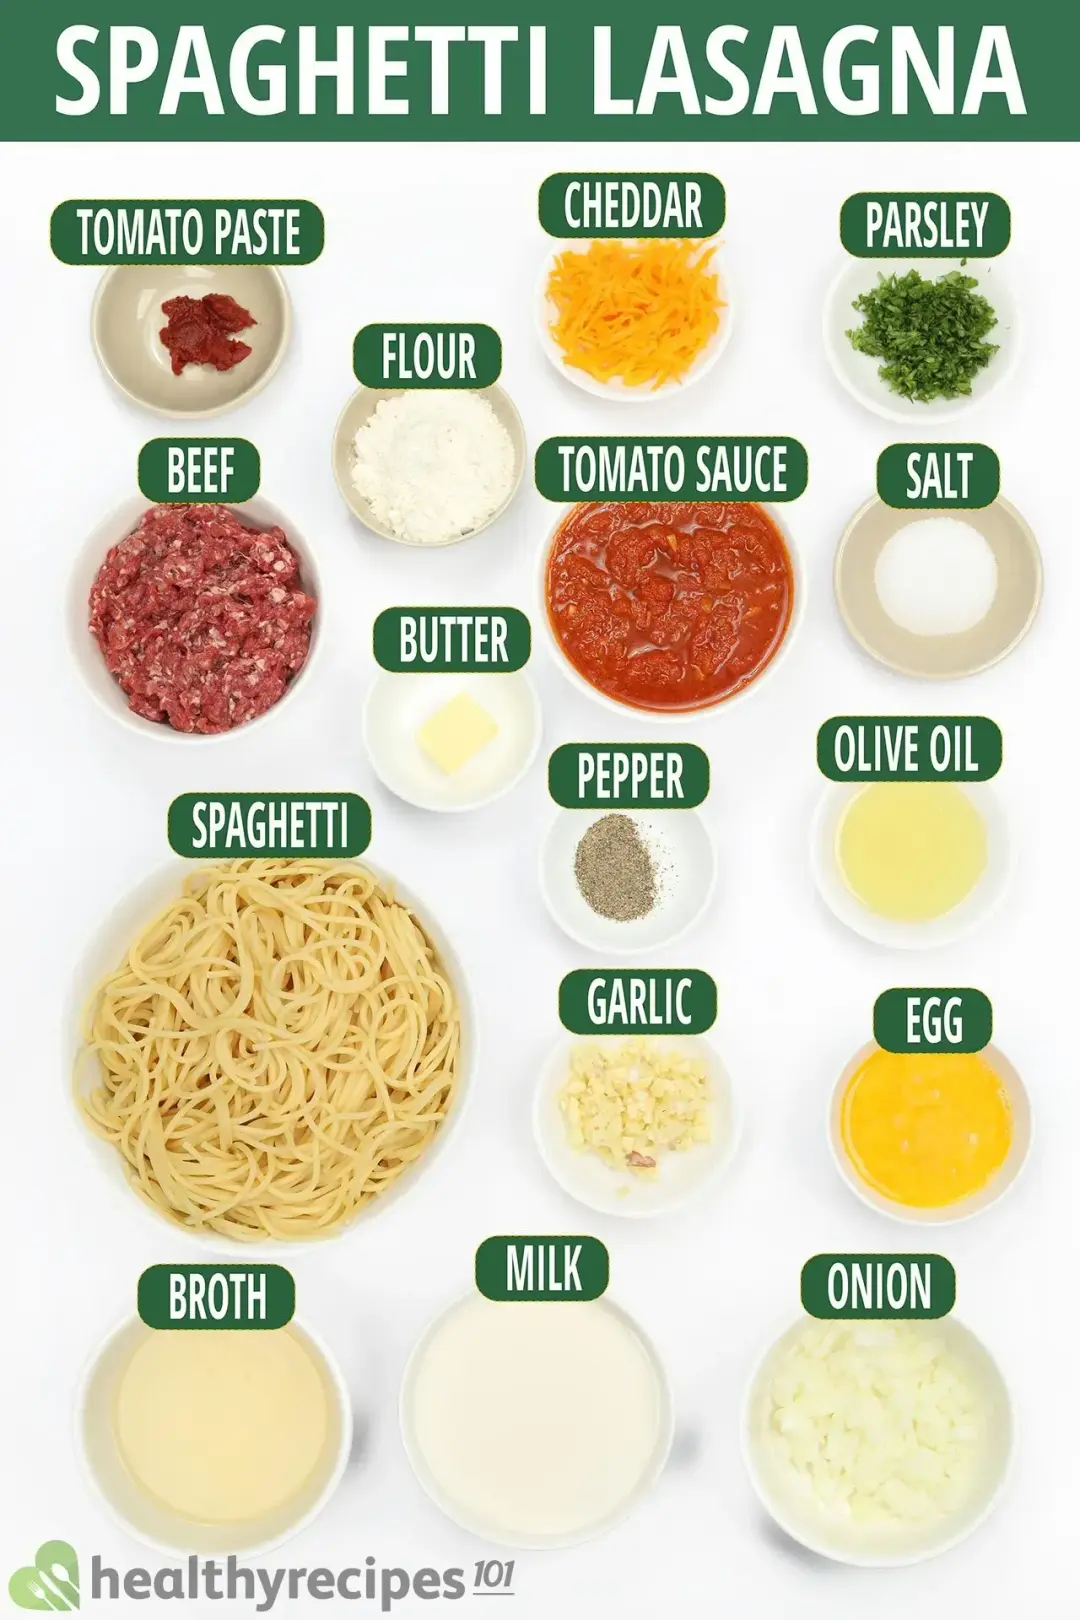 Ingredients for Spaghetti Lasagna